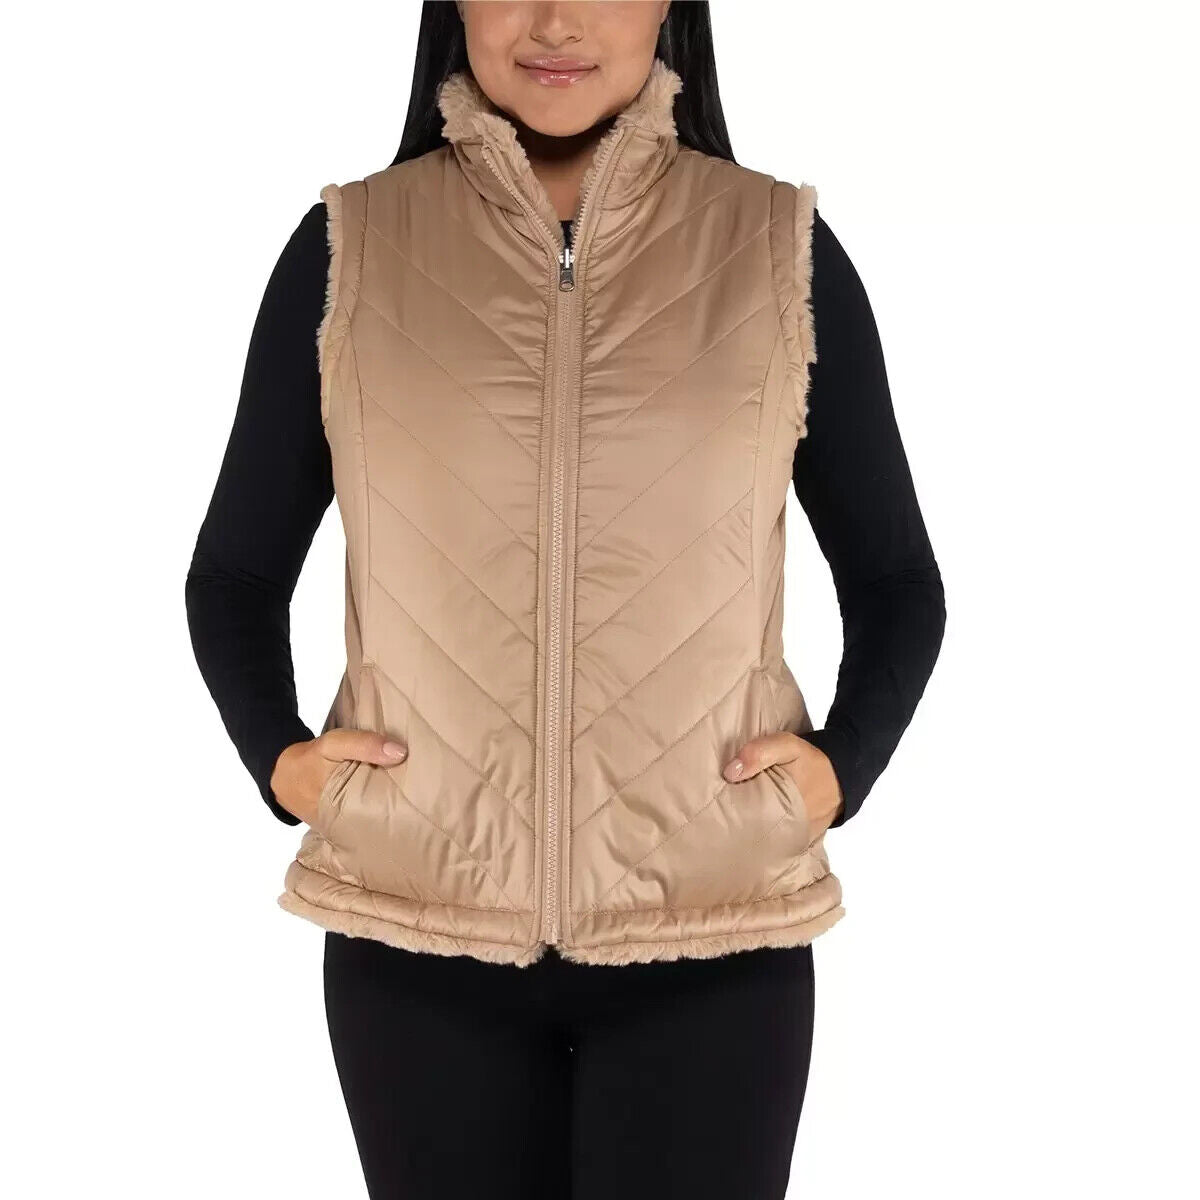 Nicole Miller Women's Faux Fur Reversible Vest in Camel, Large